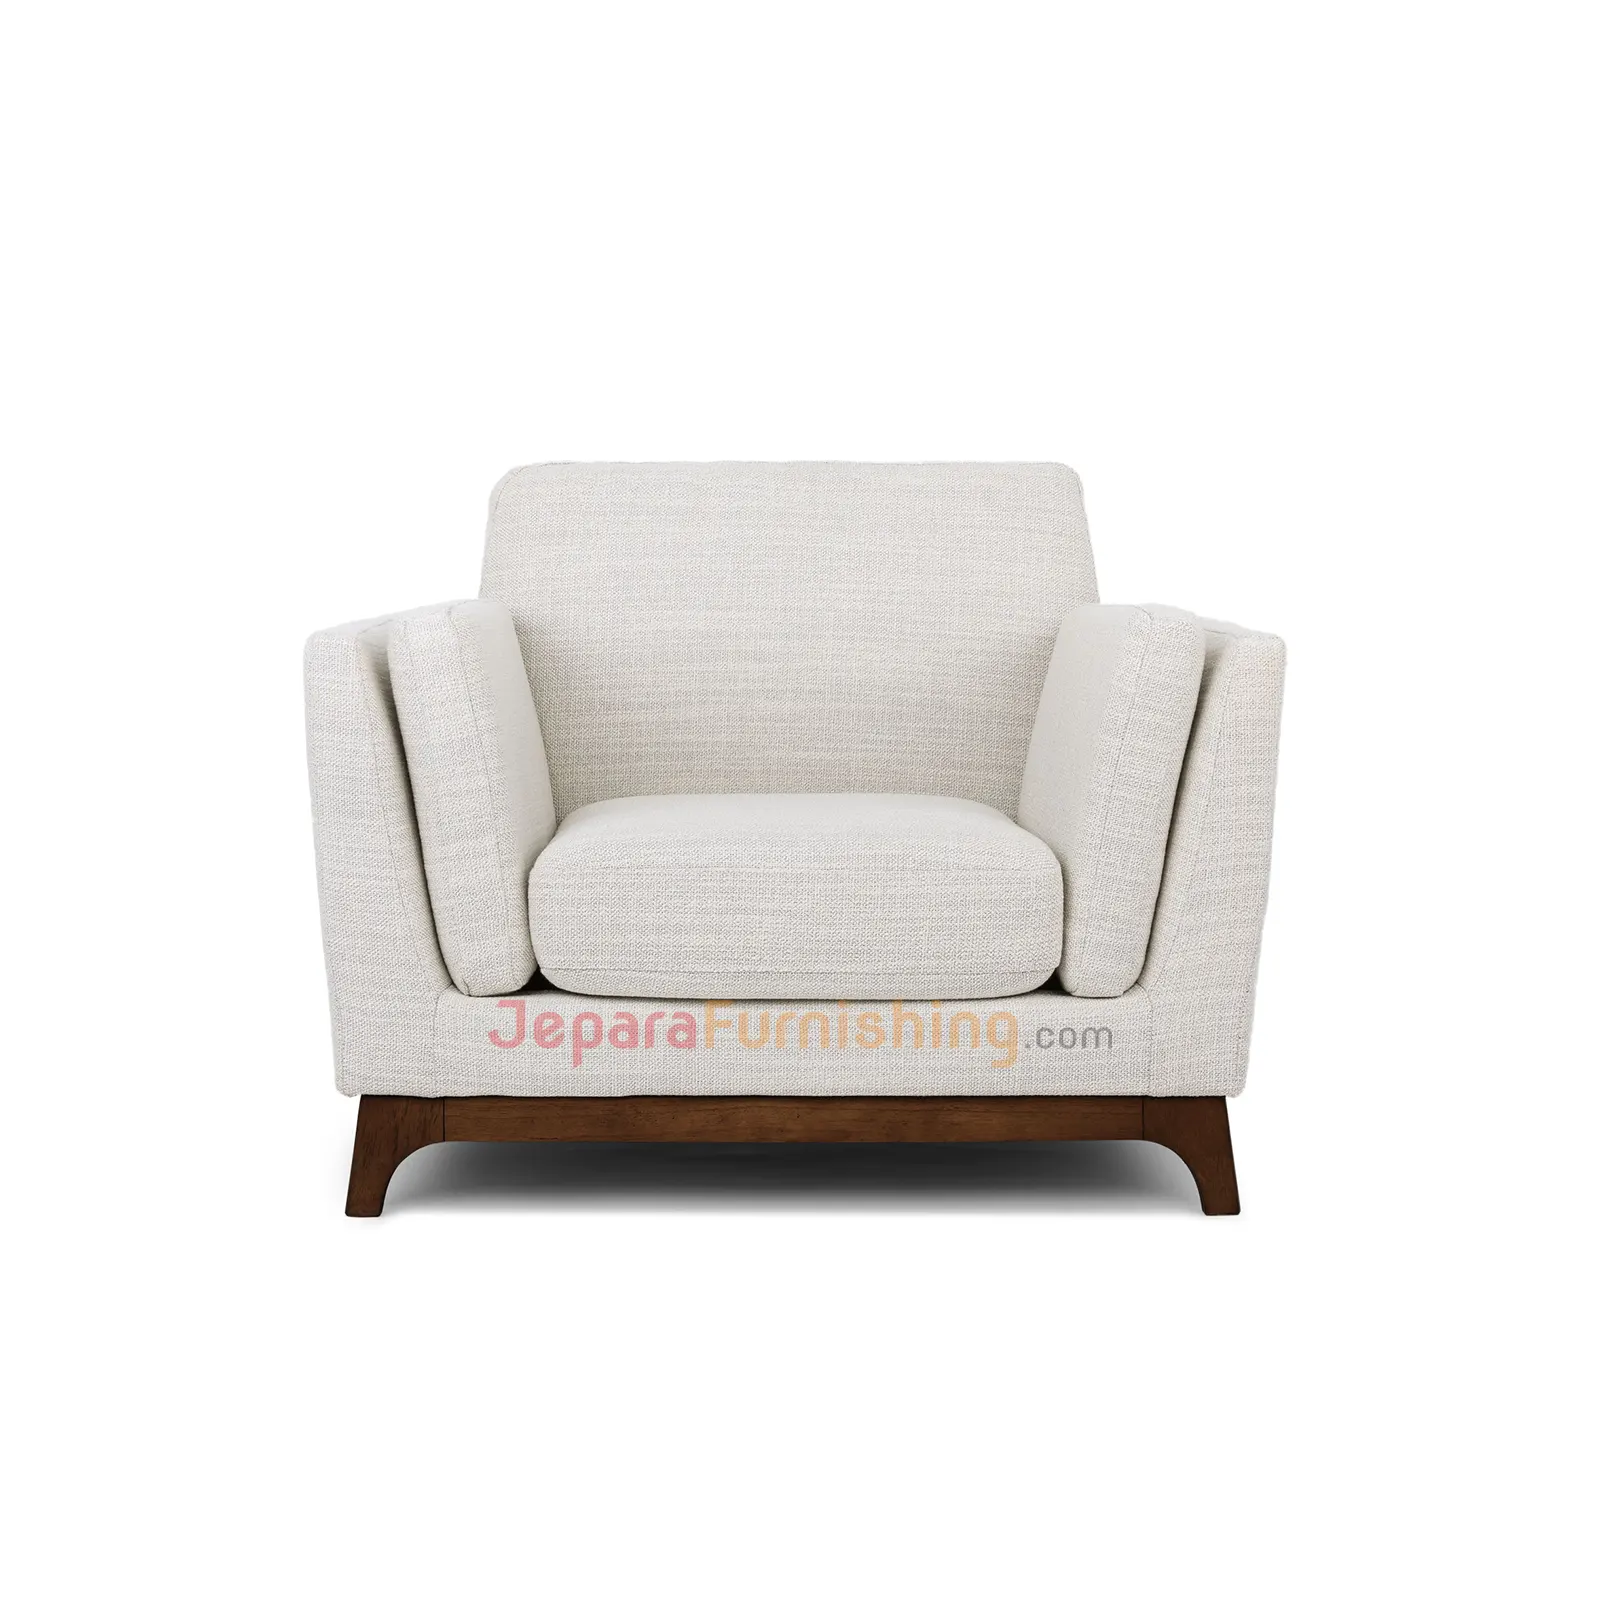 Celin Sofa Minimalis Warna Putih - Kursi Tamu Minimalis